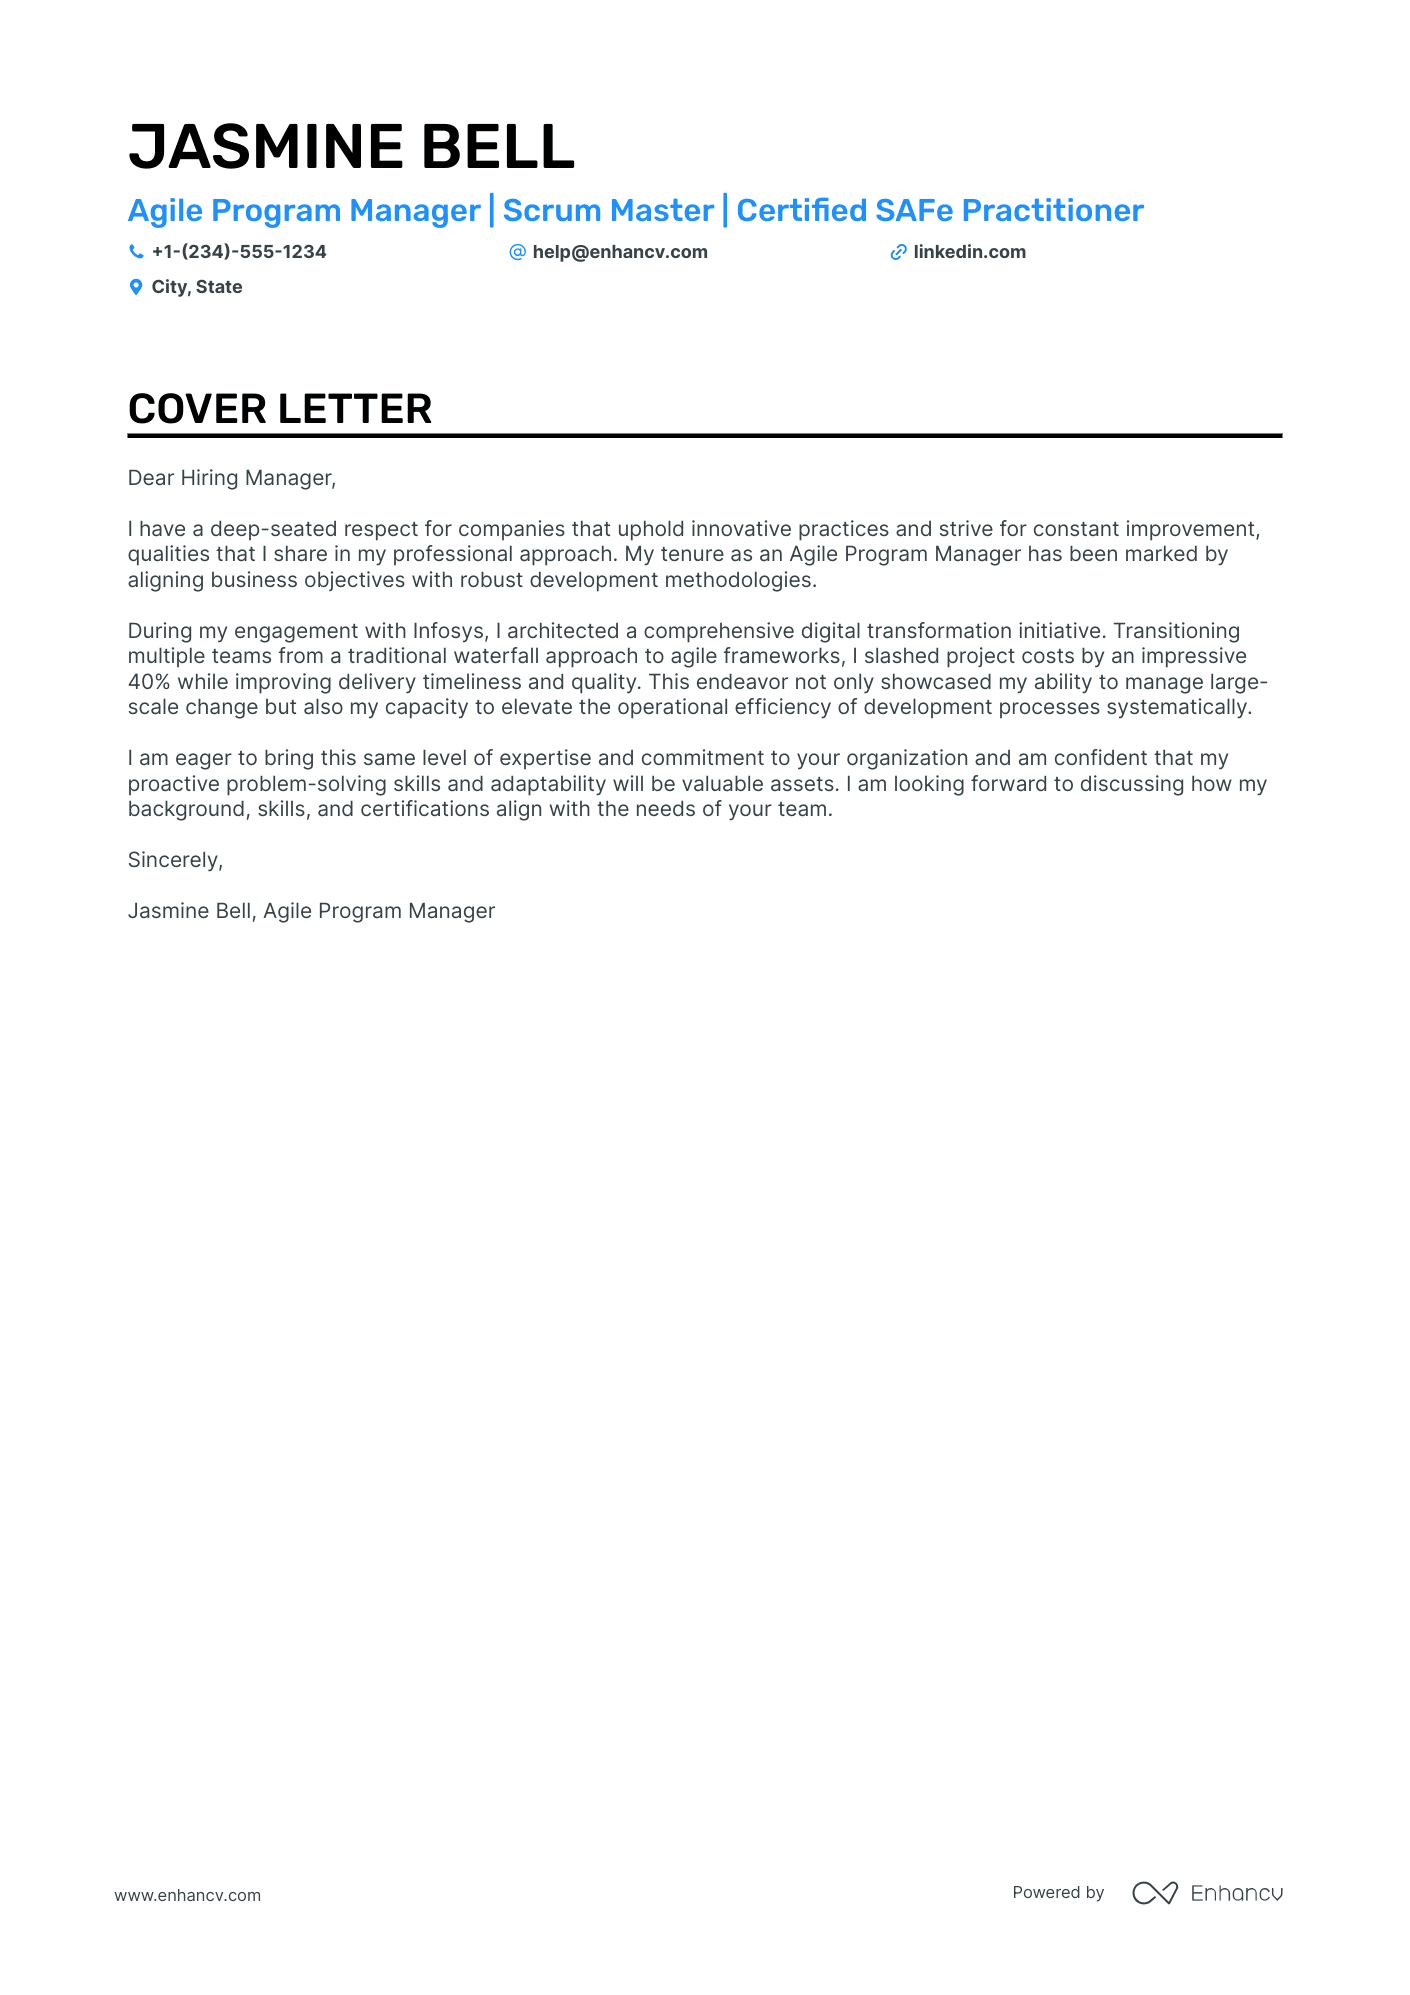 Agile Program Manager cover letter